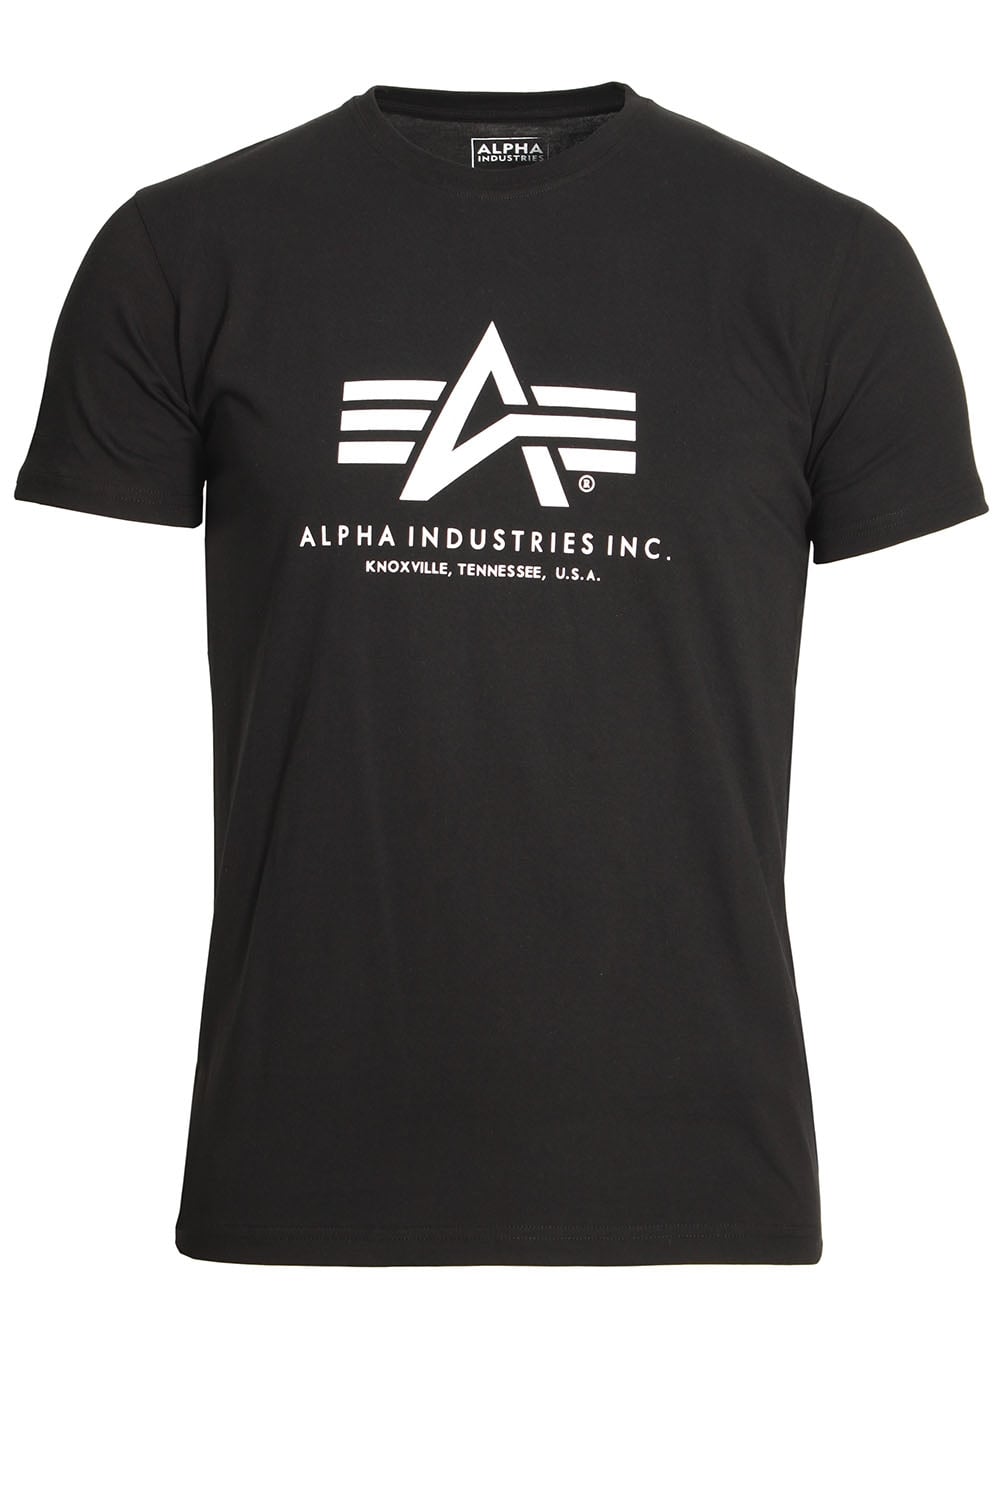 515 Logo Black - The Large - Basic Industries Alpha (100501/03) T-Shirt